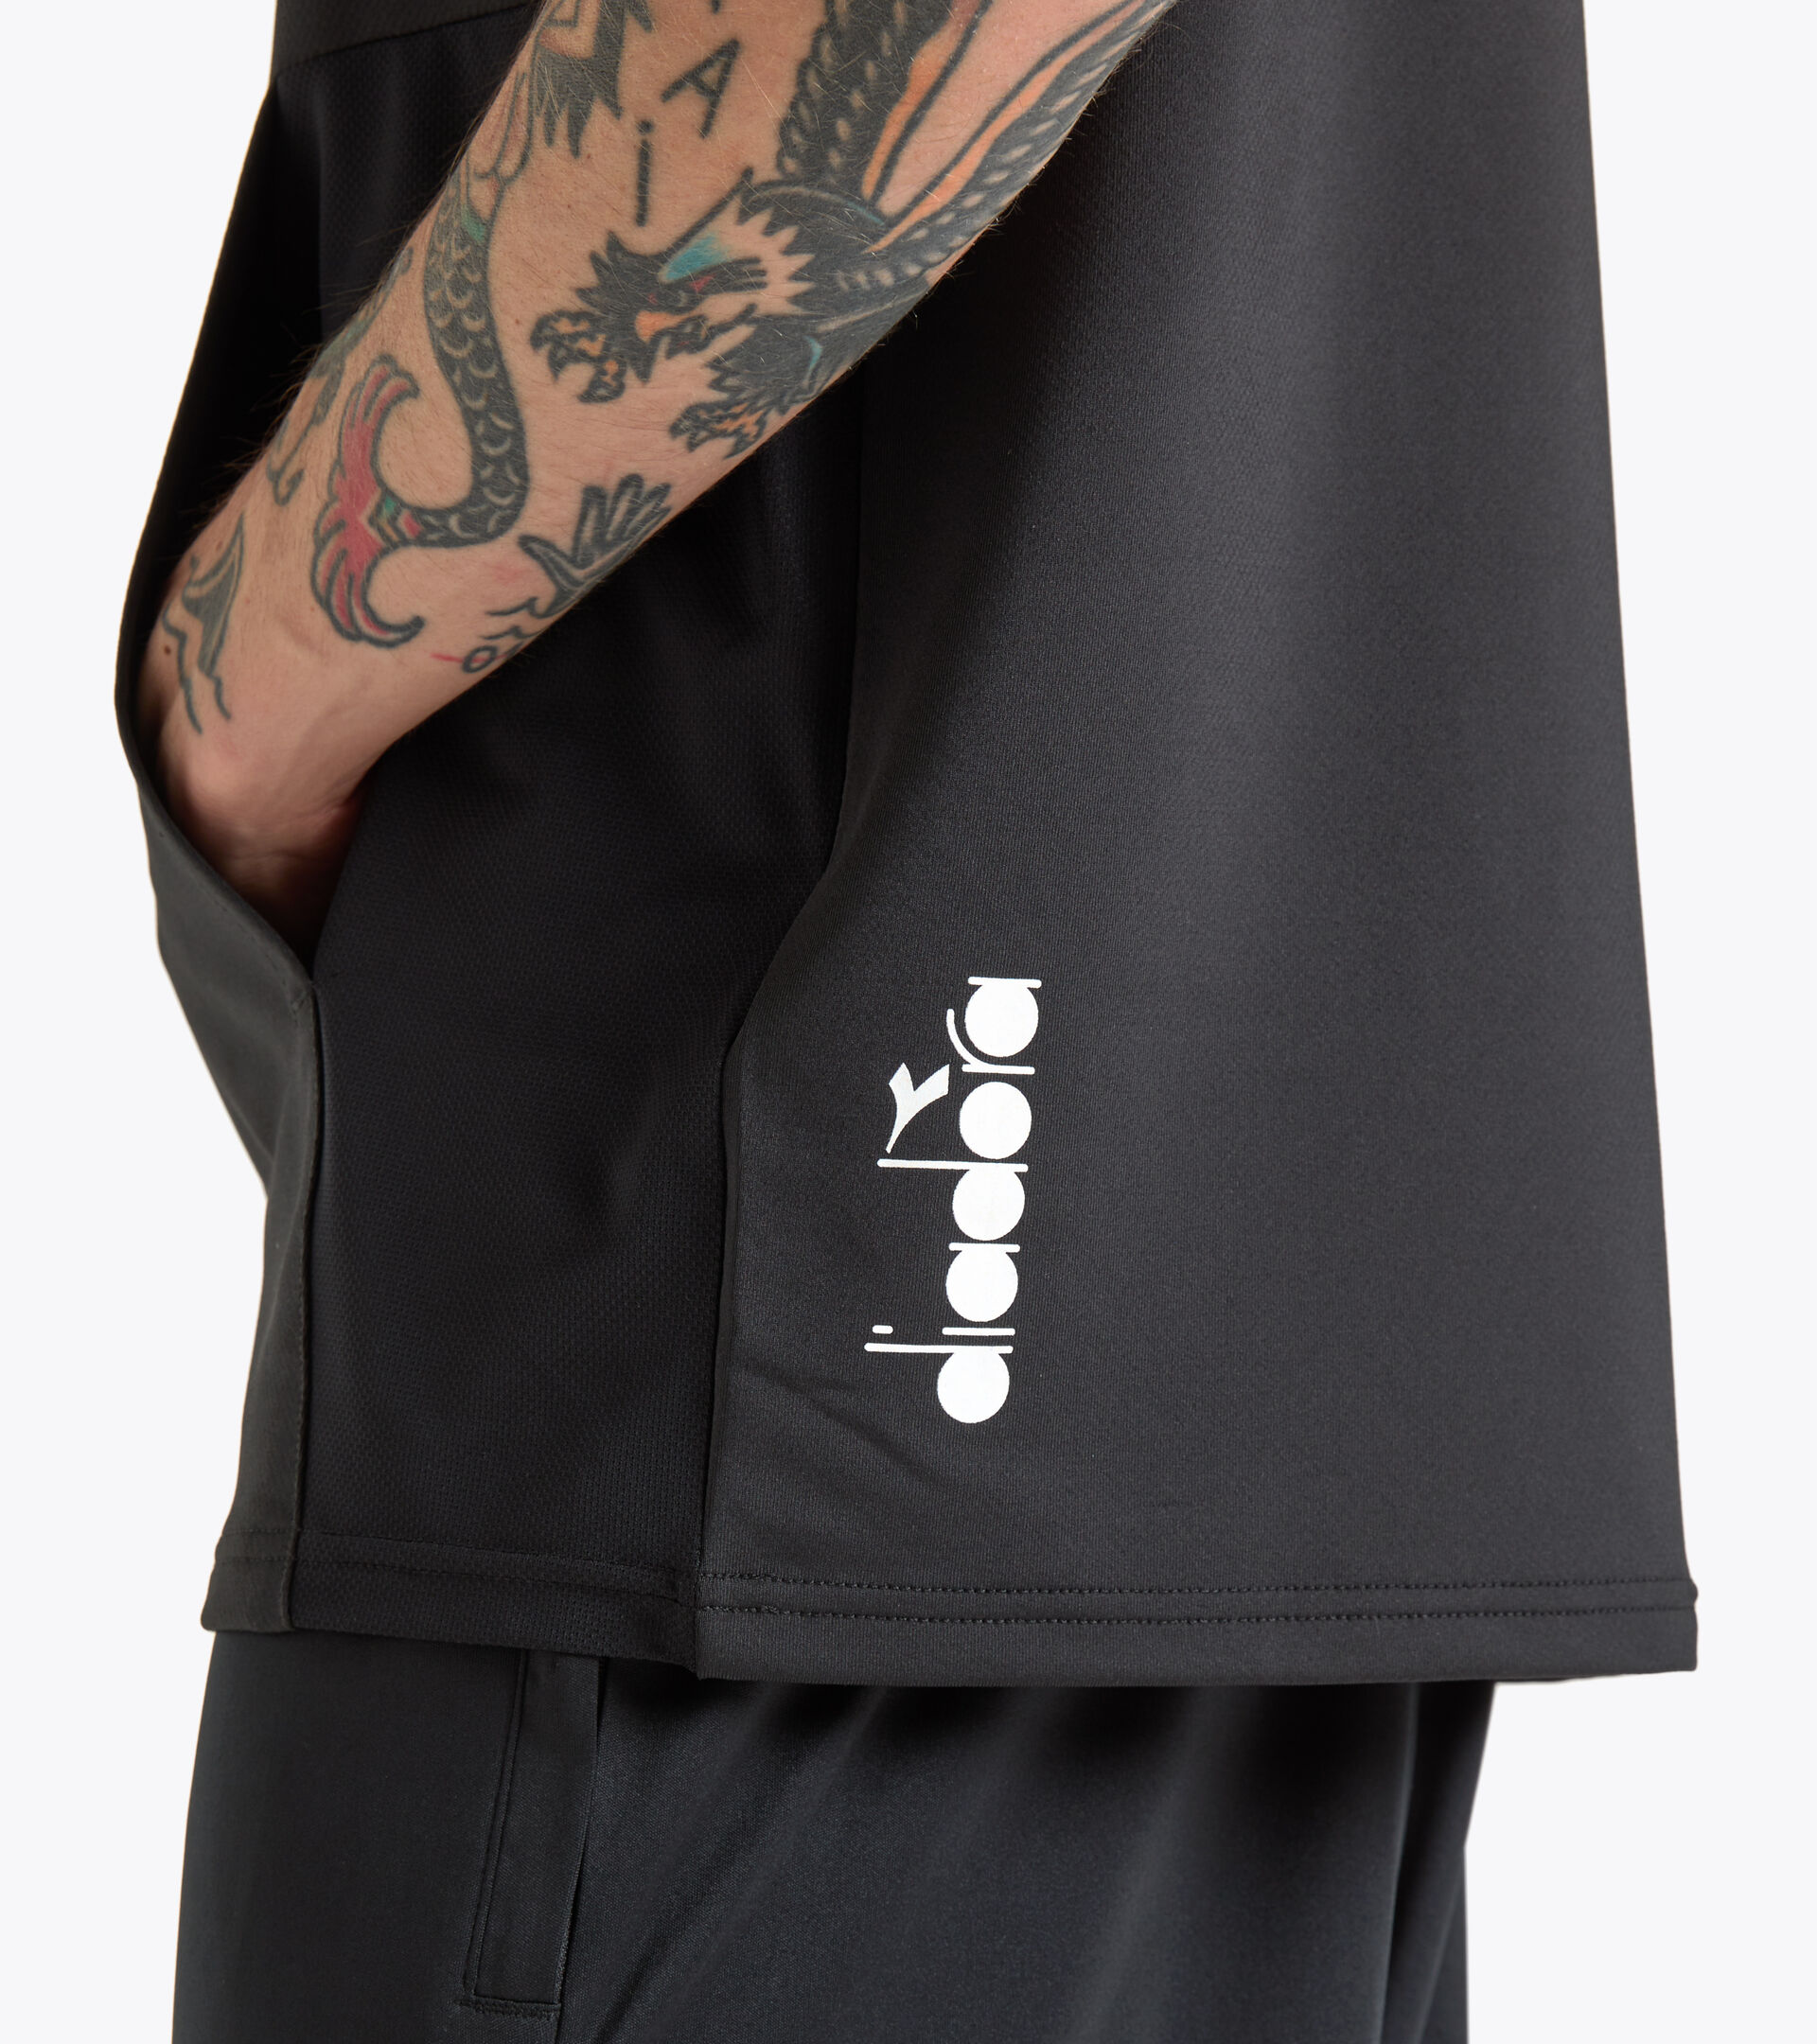 Sleeveless training sweatshirt - Men’s HD SL T-SHIRT BUDDYFIT BLACK - Diadora